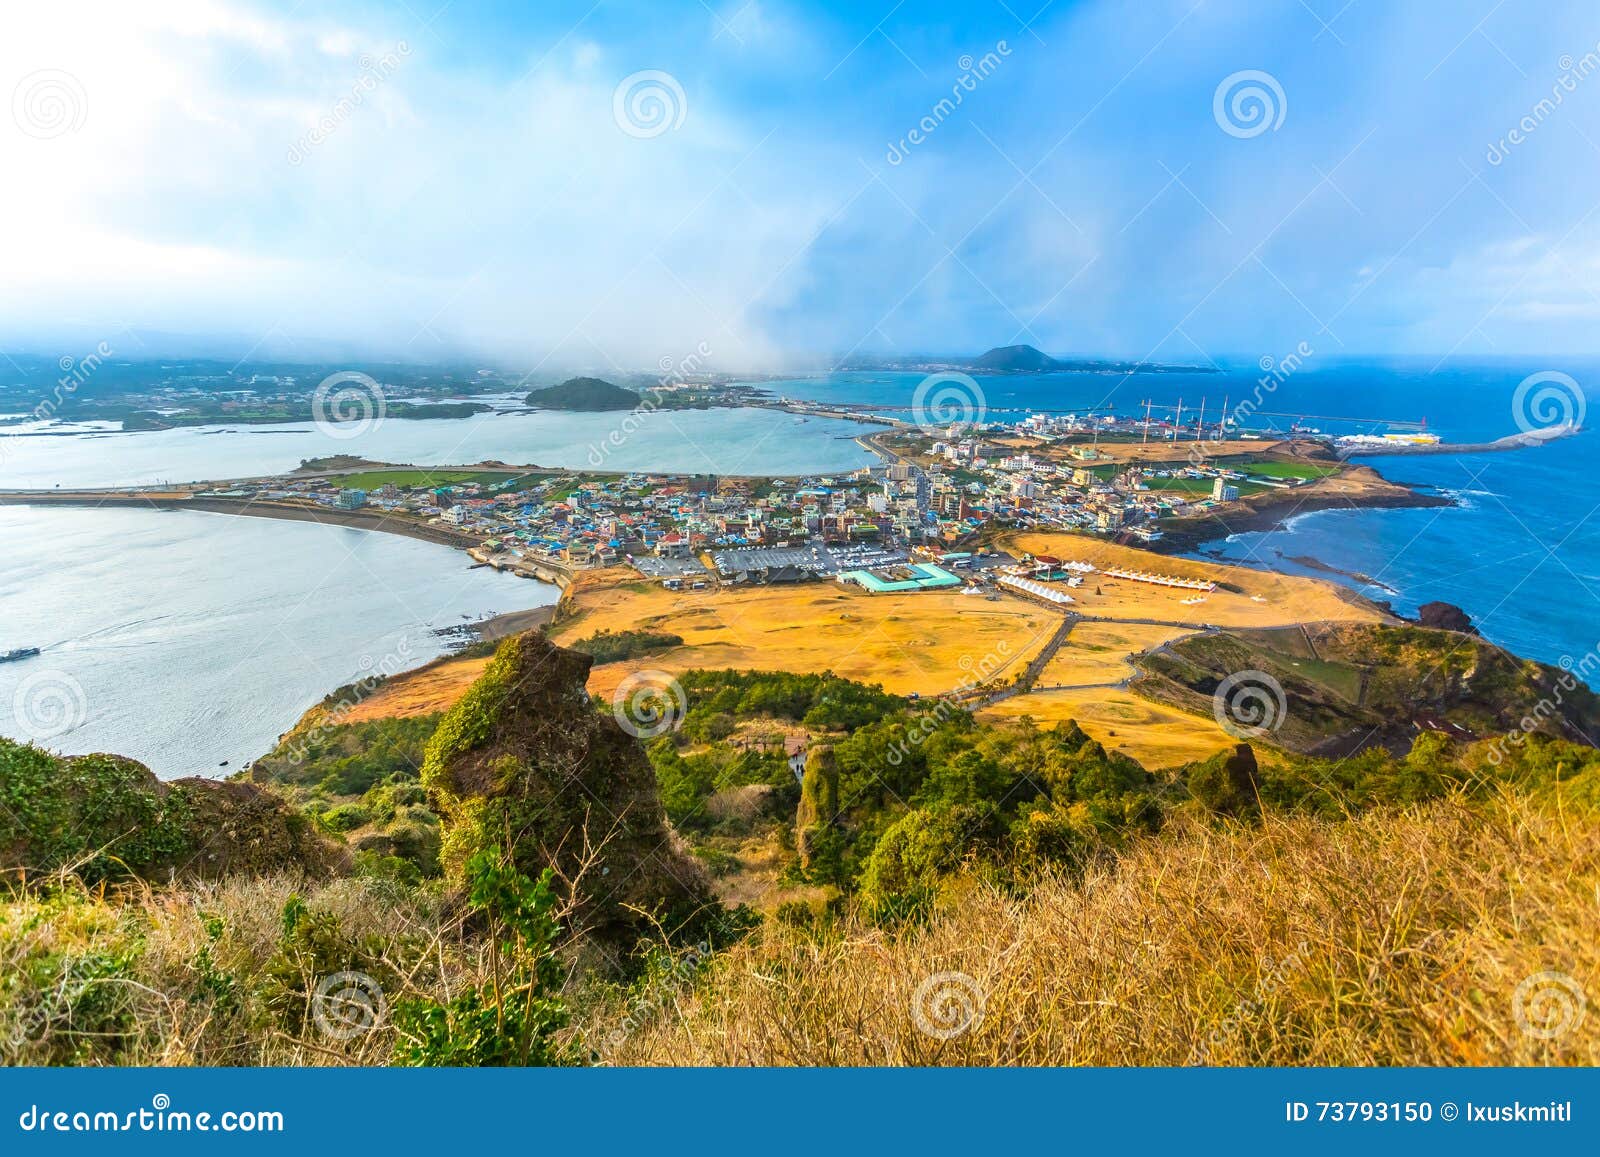 view from seongsan ilchulbong moutain in jeju island, south korea